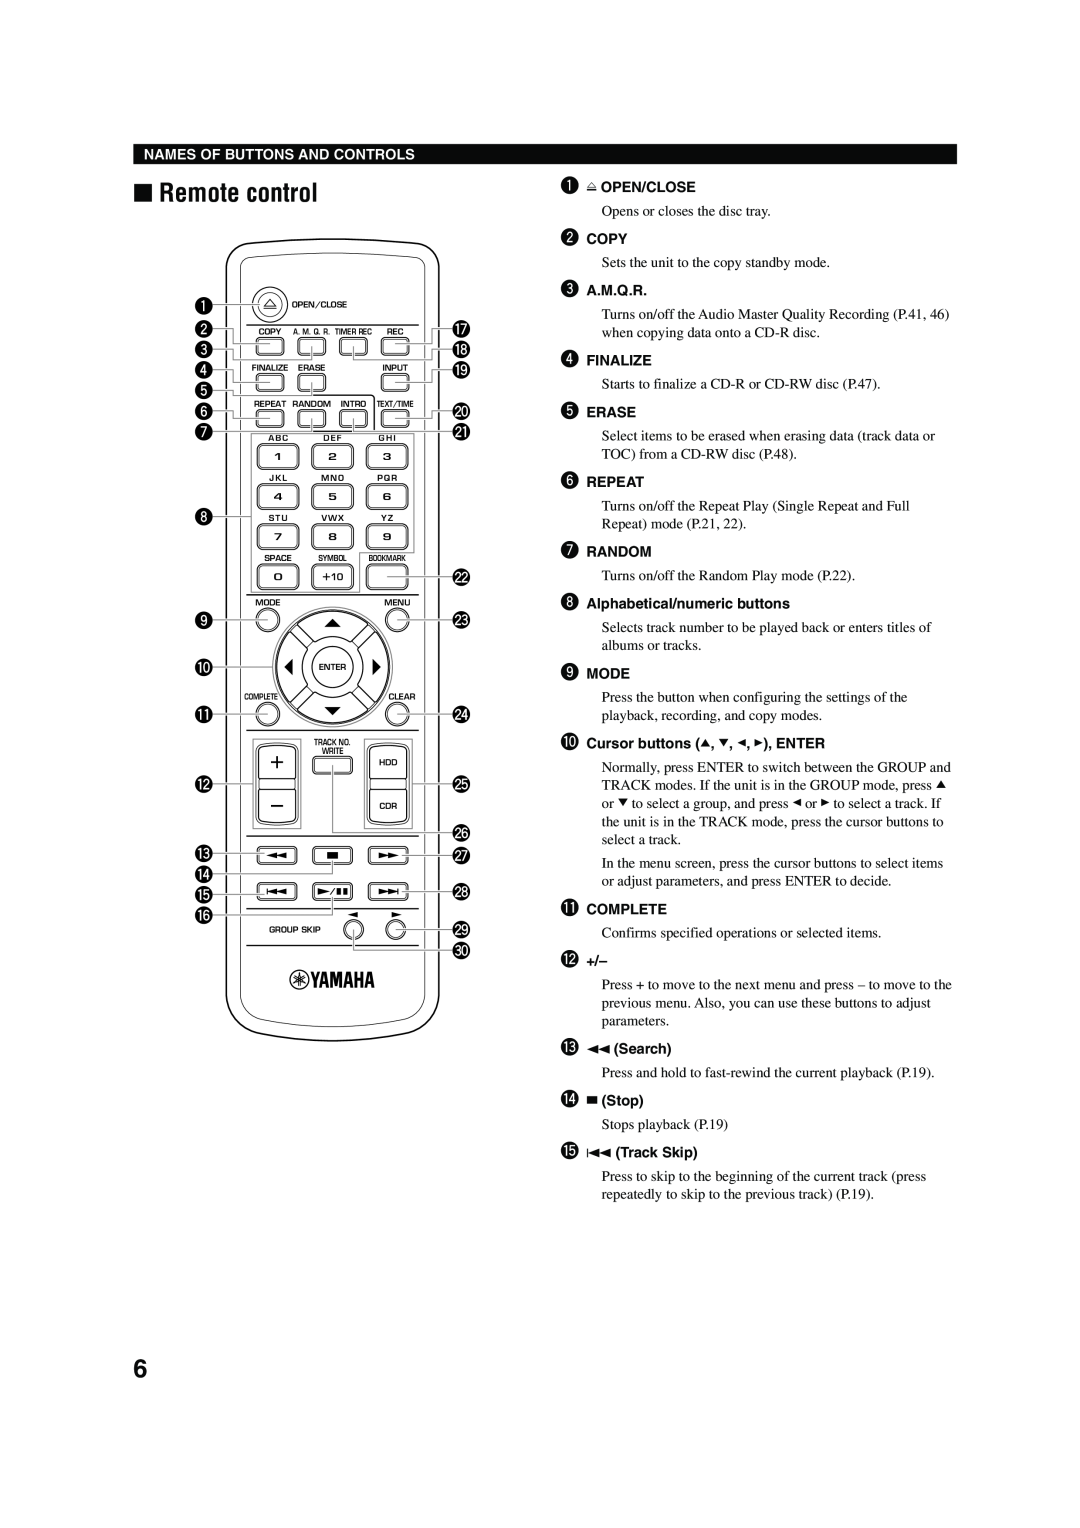 Yamaha CDR-HD 1500 owner manual Remote control, e r t y 